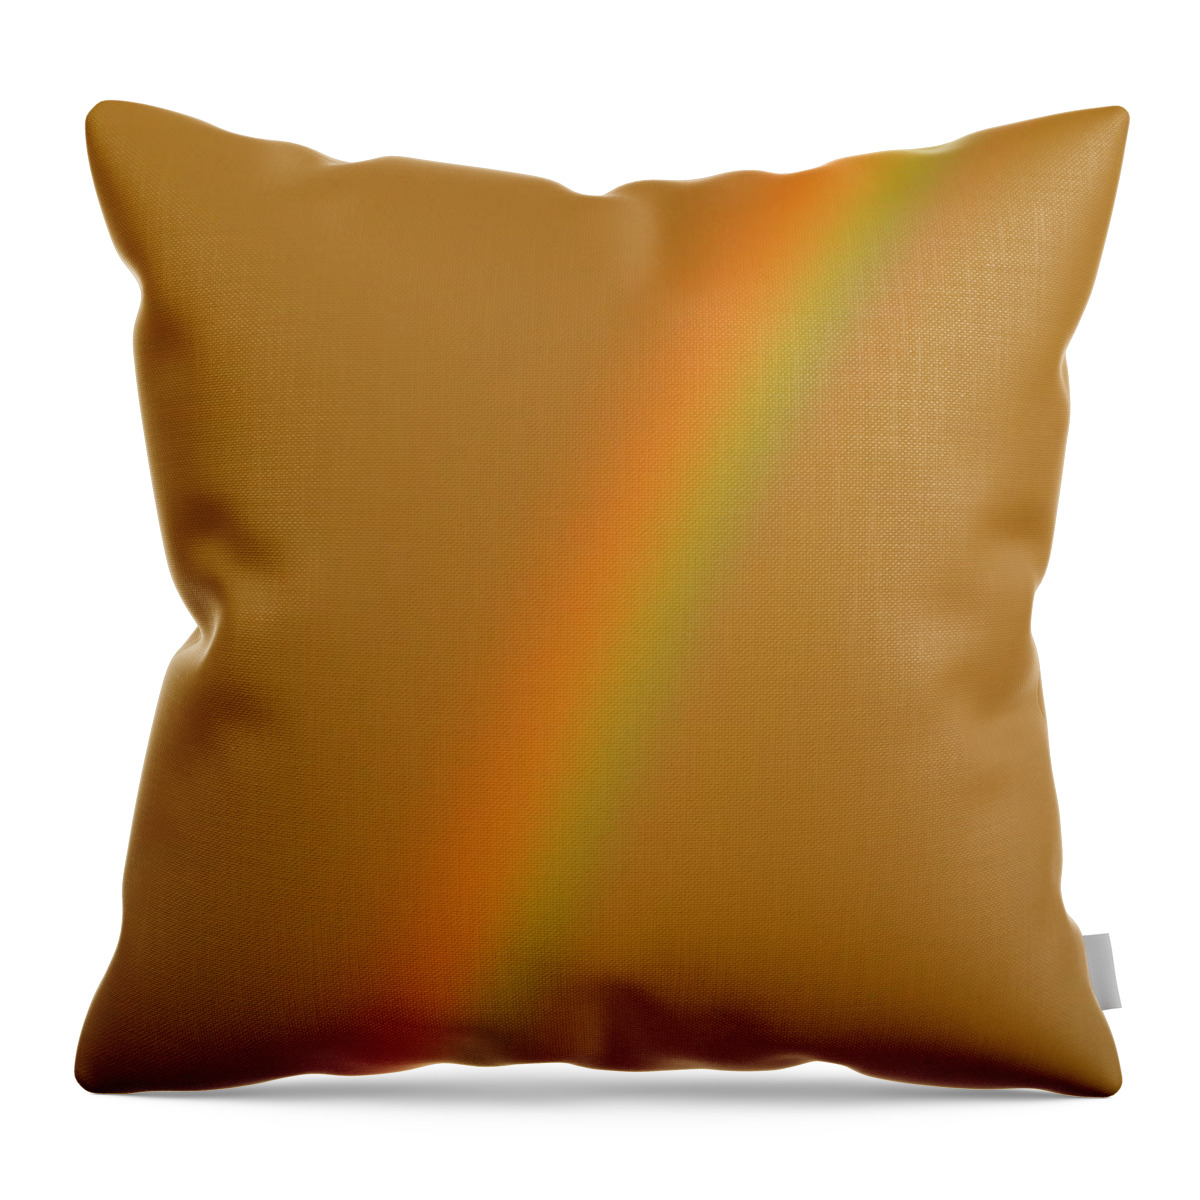 Rainbow Throw Pillow featuring the photograph A Sunset Rainbow by Diana Hatcher